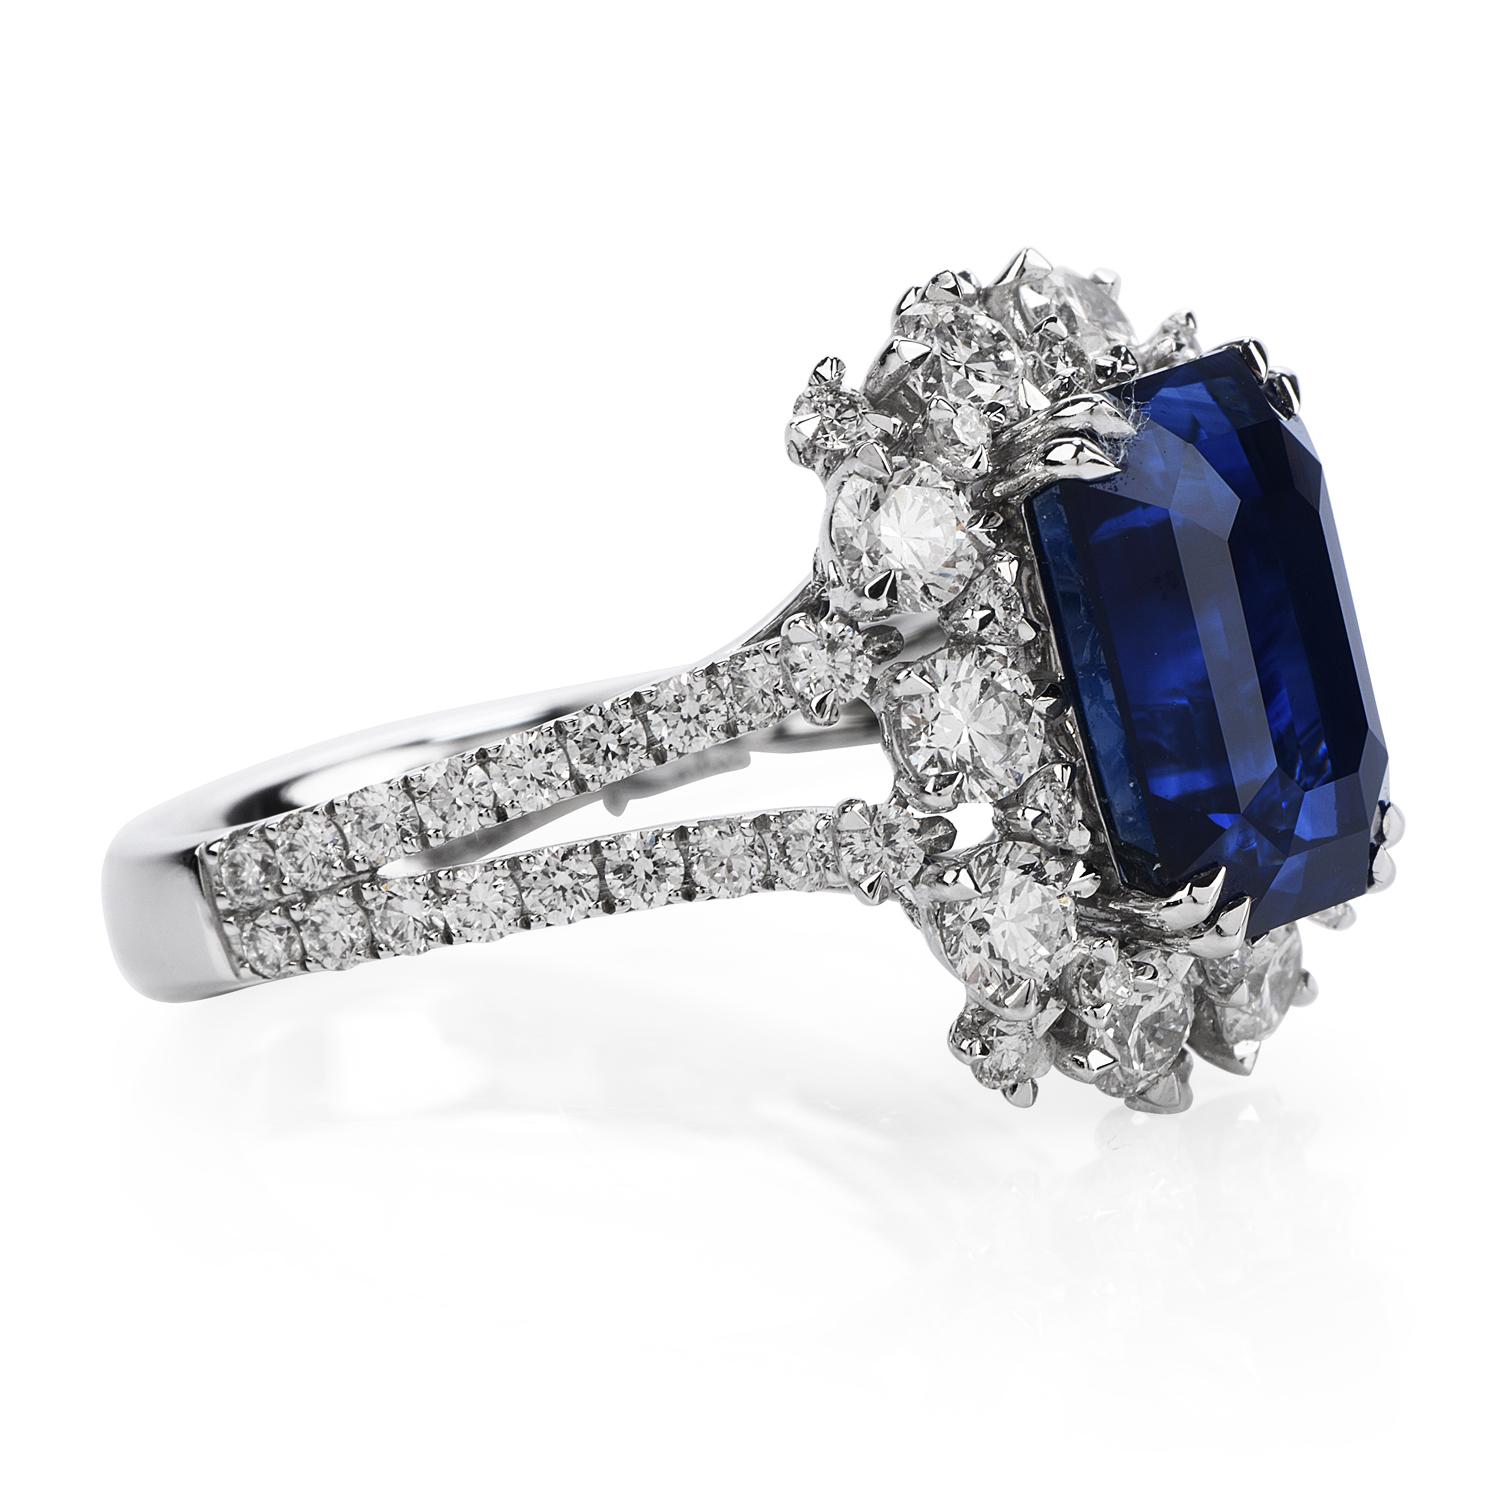 Emerald Cut Certified 6.80 Carat Royal Blue Sapphire Diamond 18k Gold Halo Cocktail Ring